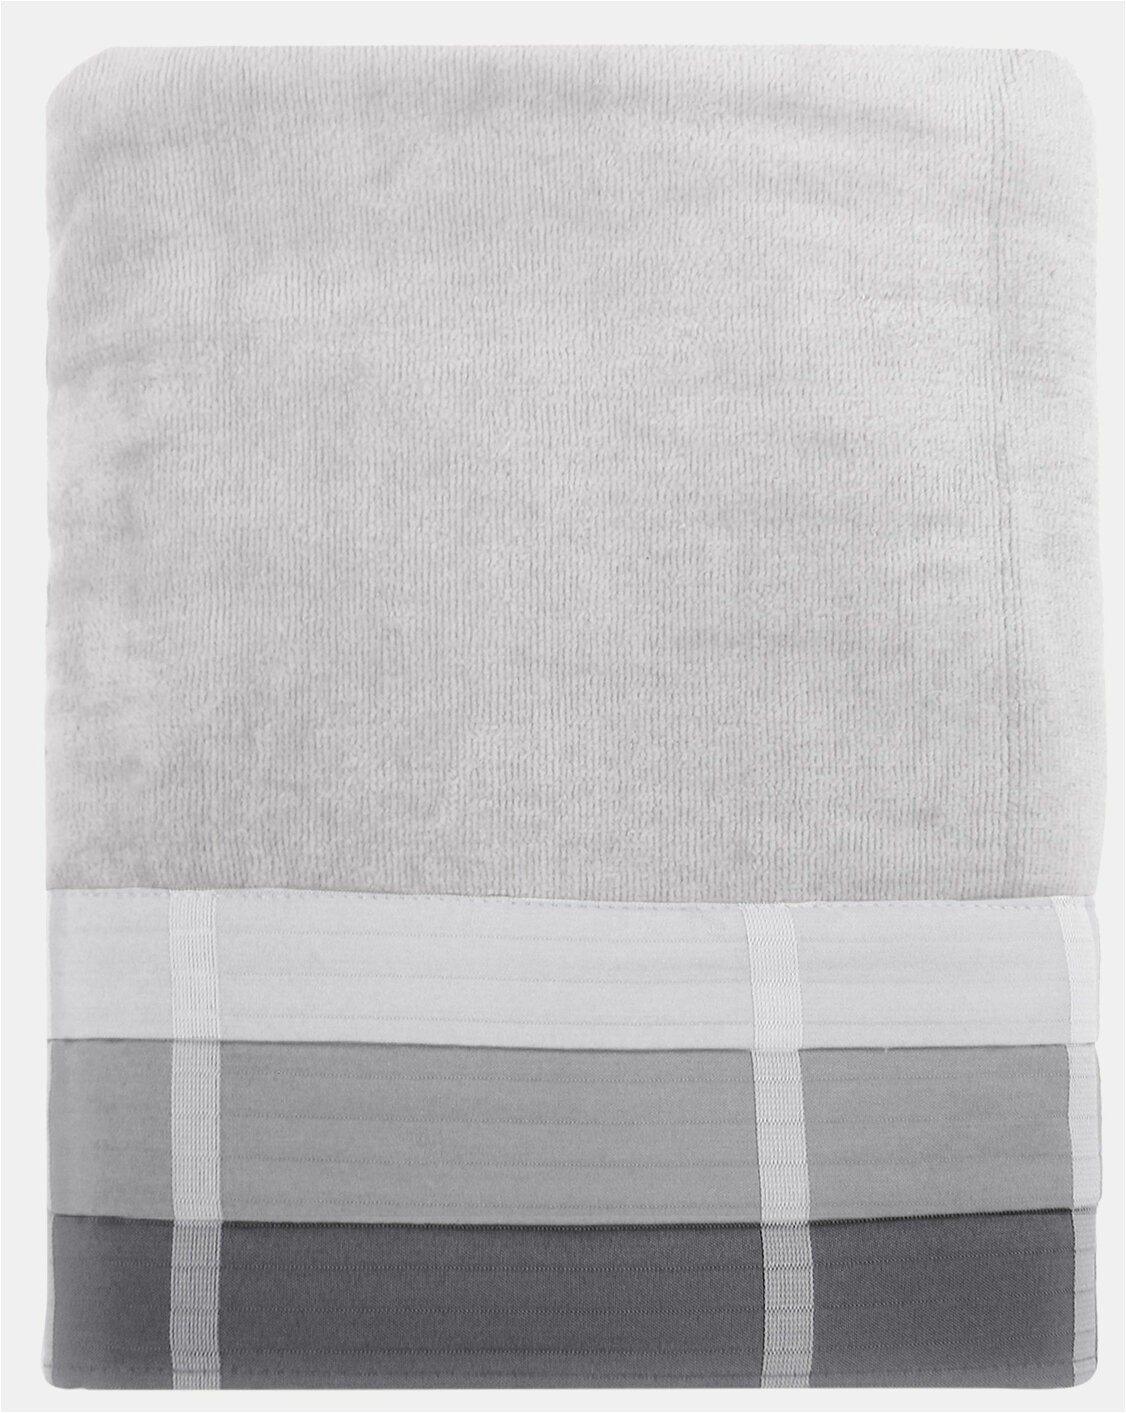 Croscill Nomad Bath Rug Fairfax Cotton Bath towel